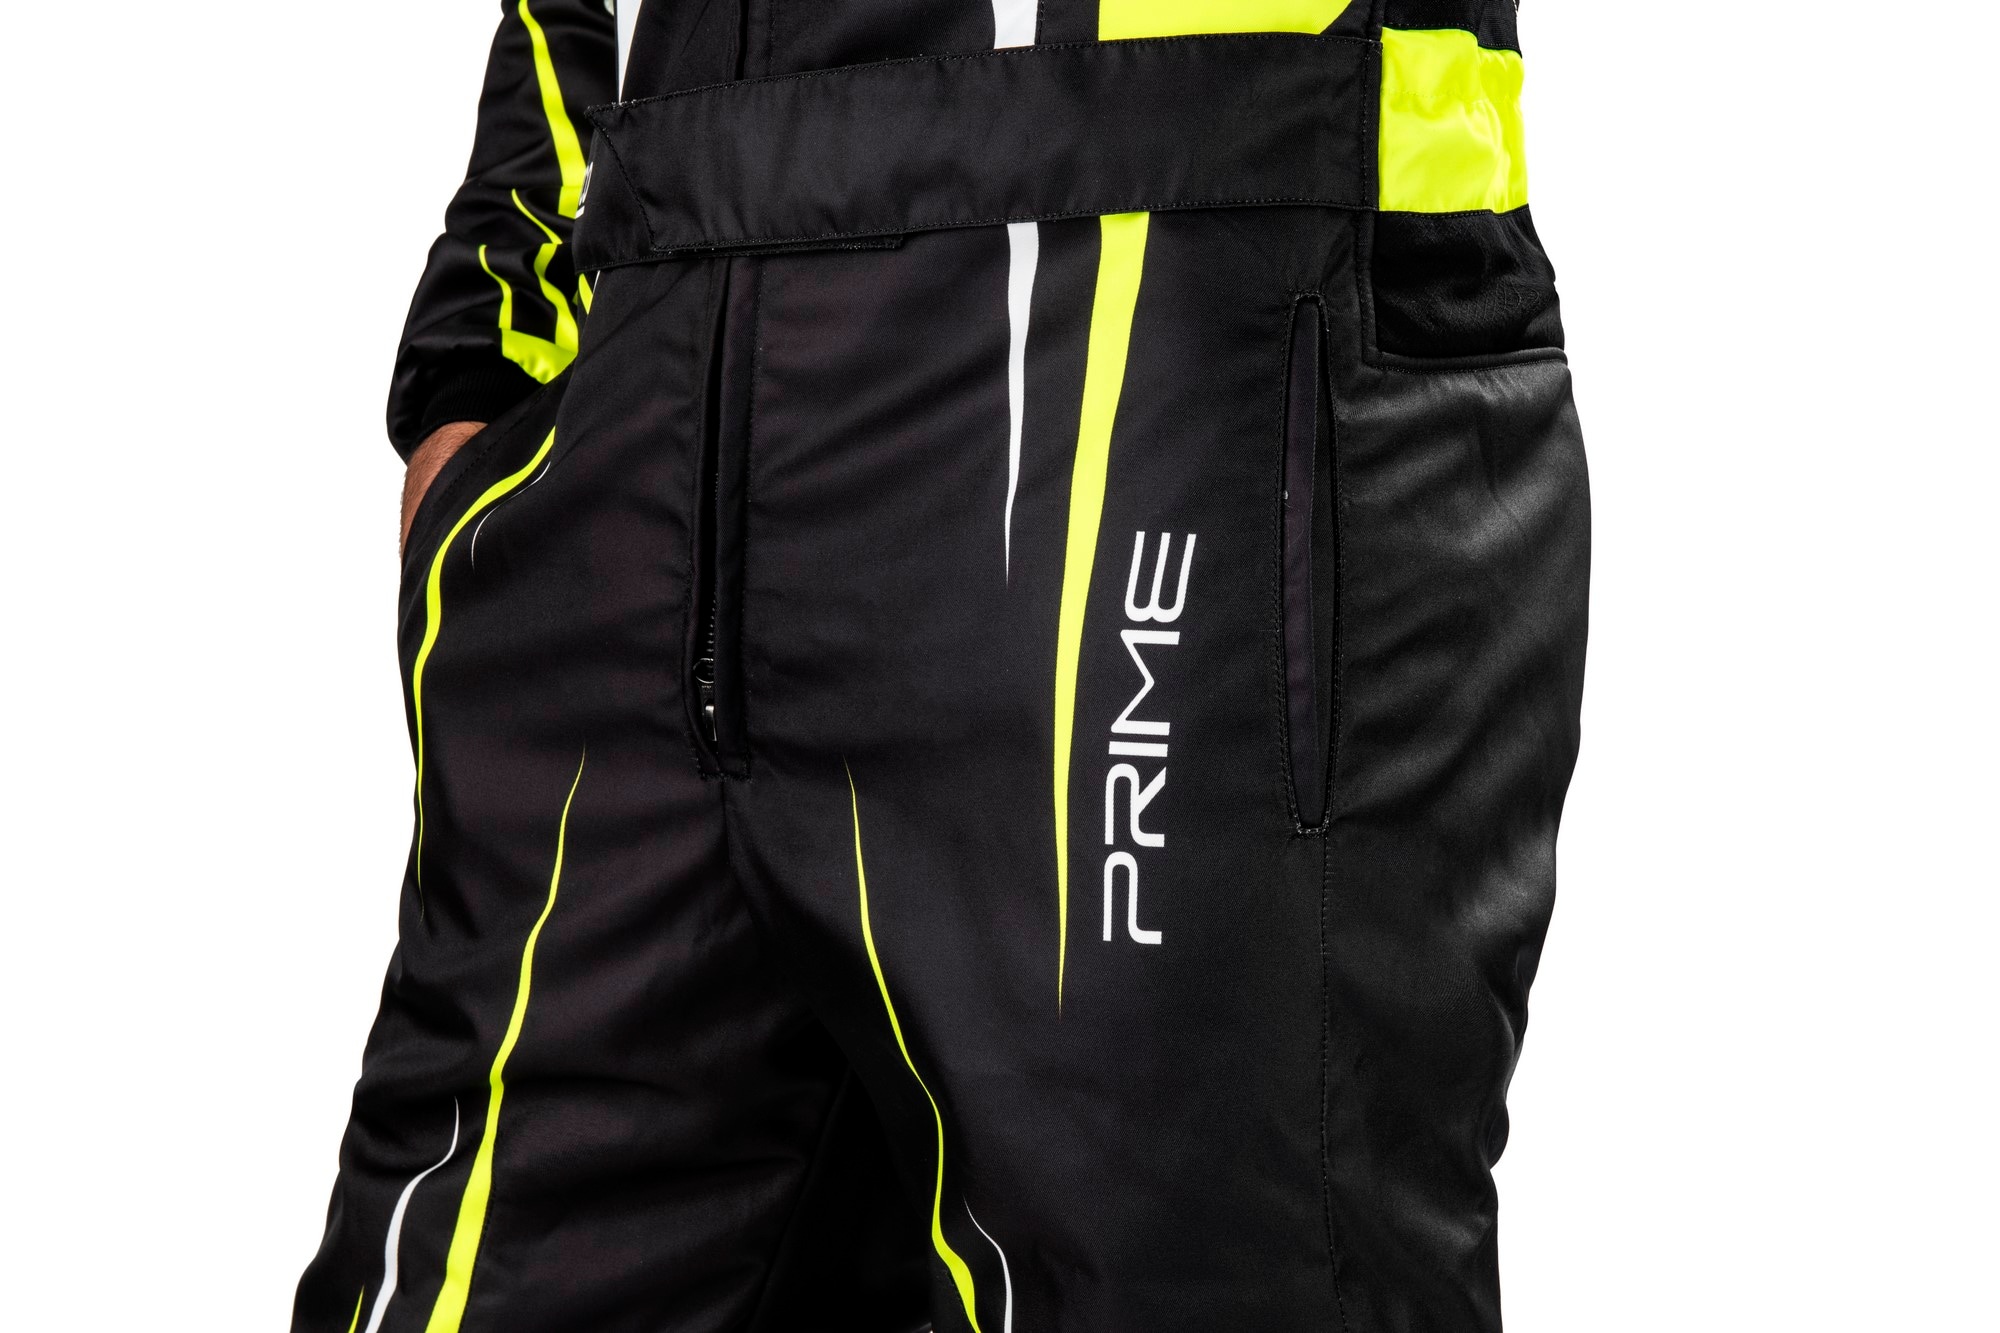 Racing Suit Sparco Prime K Black/Yellow